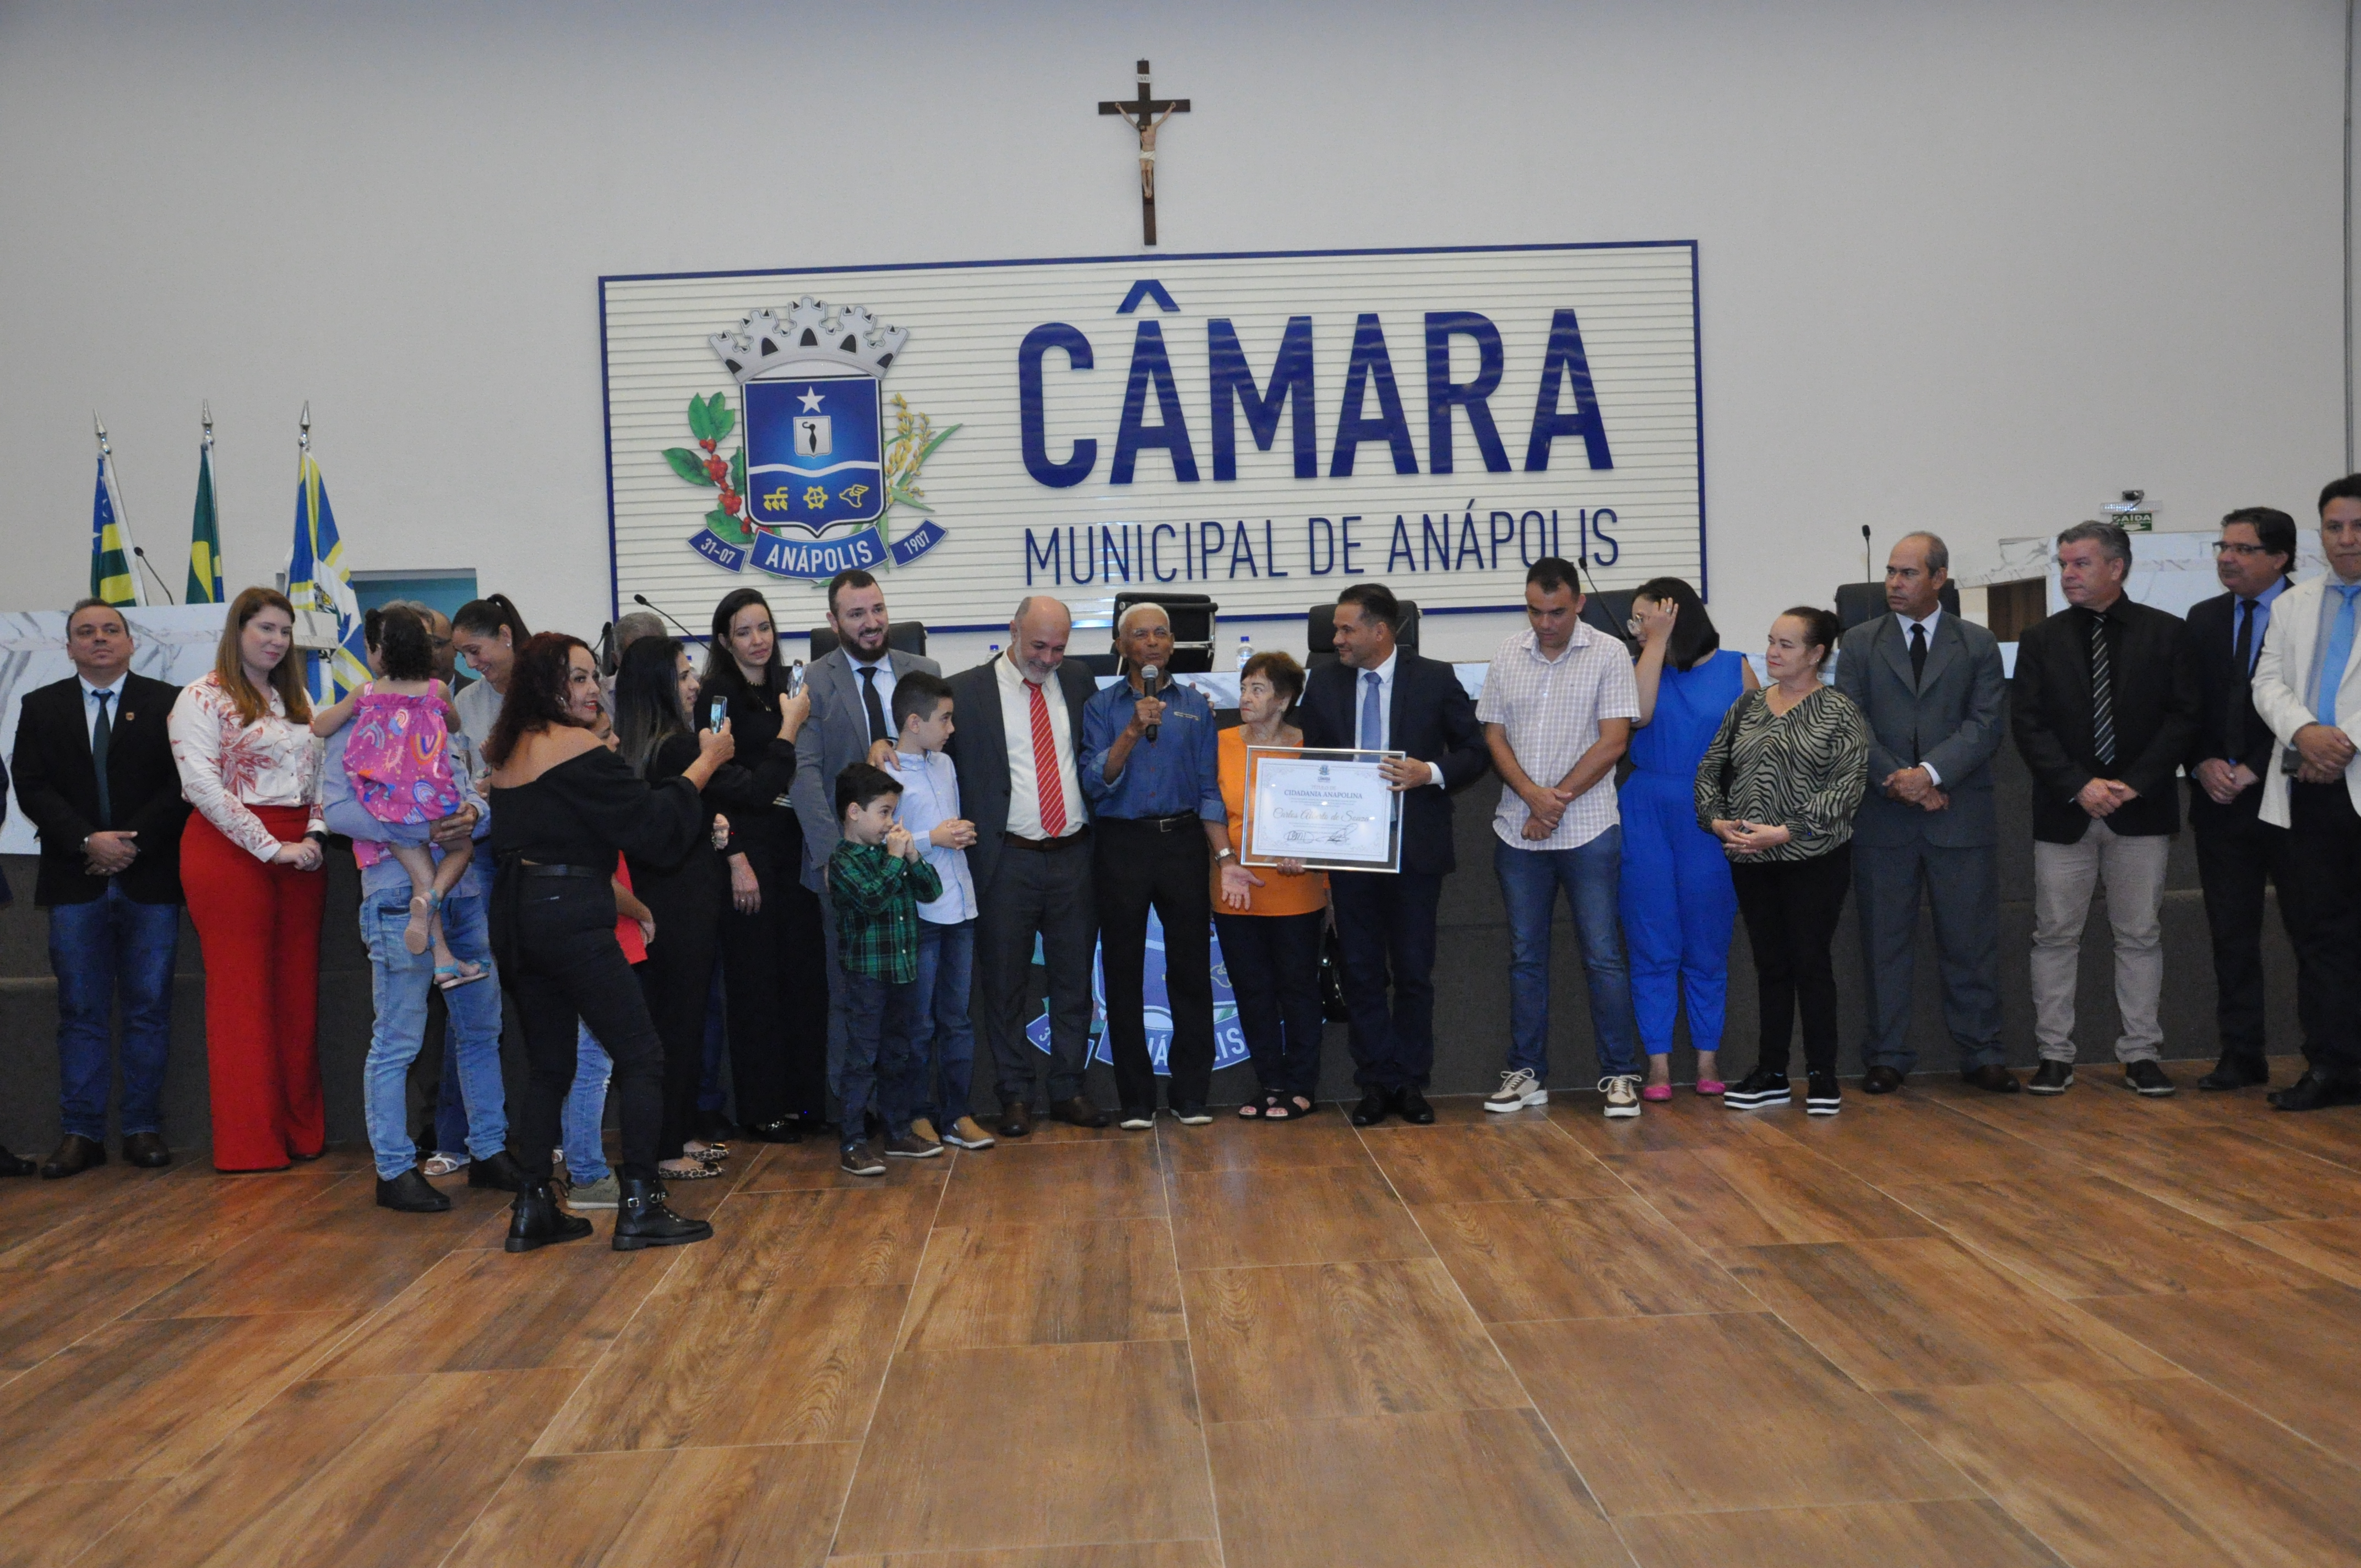 Câmara entrega título de cidadania anapolina ao líder comunitário Carlos Alberto de Souza